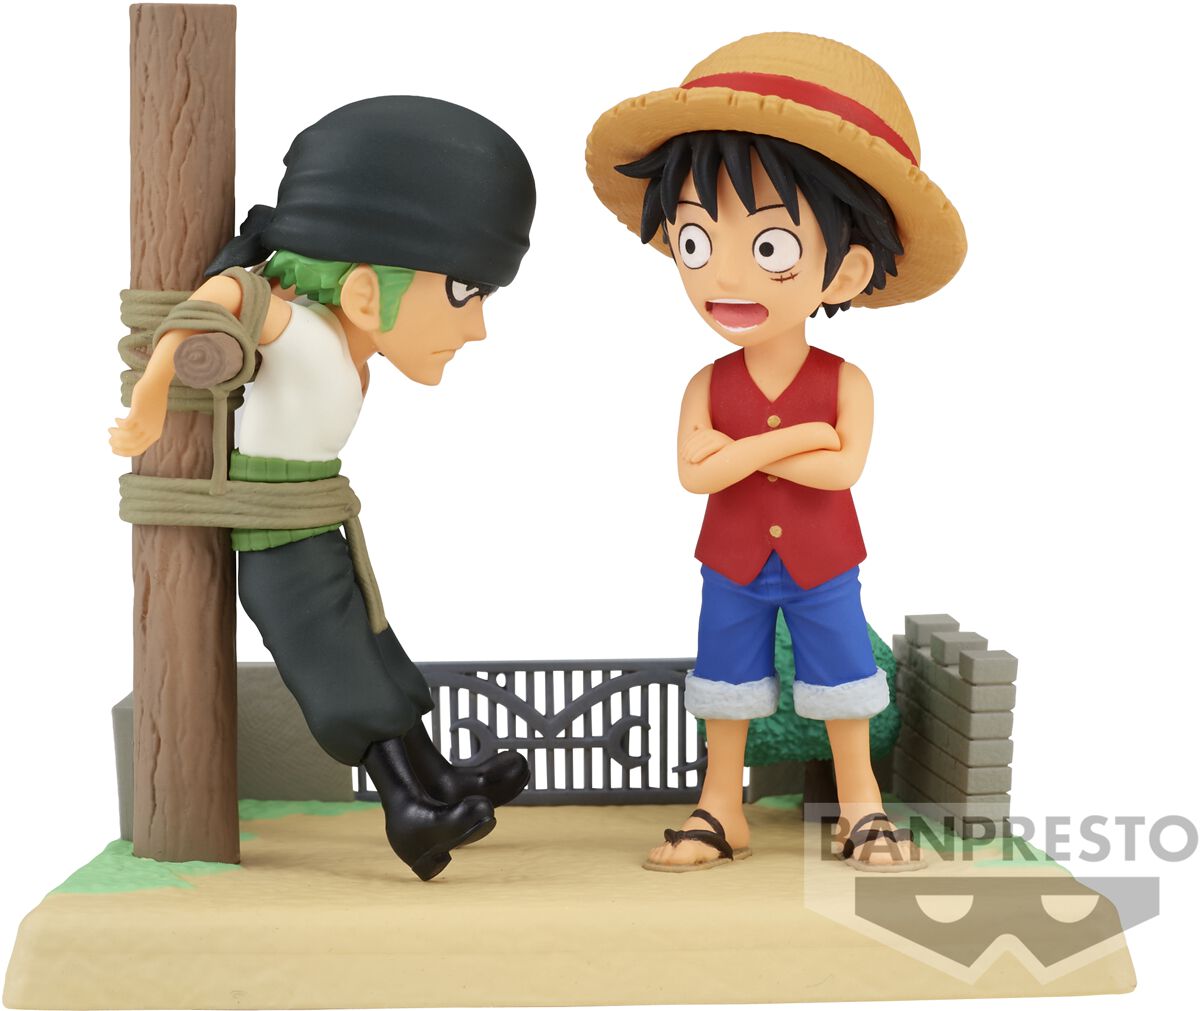 One Piece - Banpresto - Monkey D. Luffy & Roronoa Zoro (WCF - Log Stories Series) - Sammelfiguren - multicolor